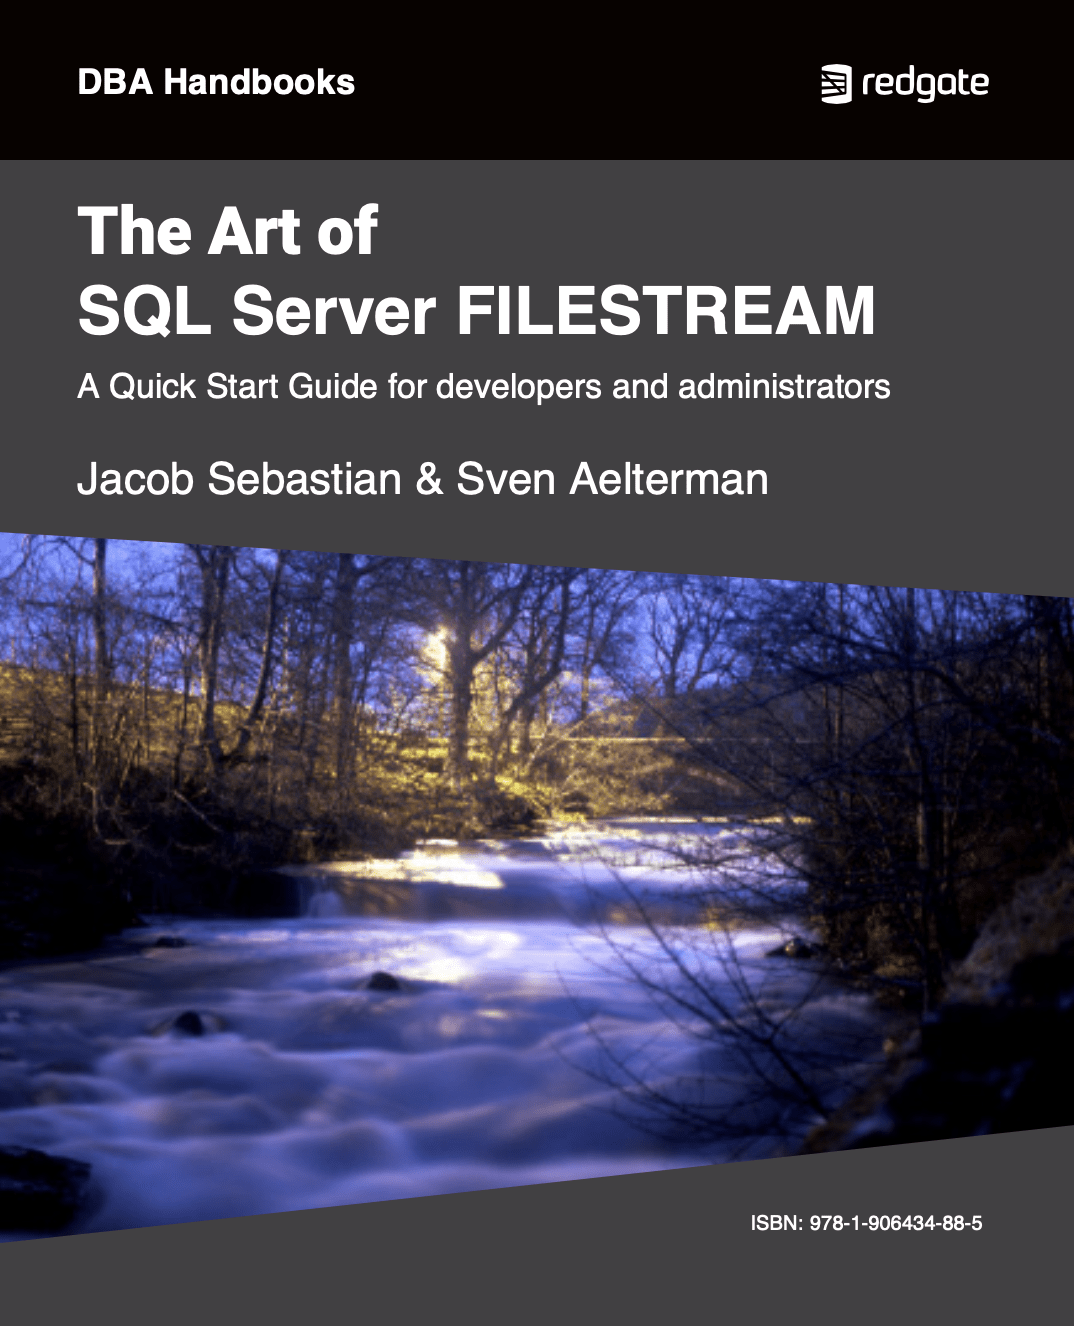 The Art of SQL Server Filesteam eBook cover